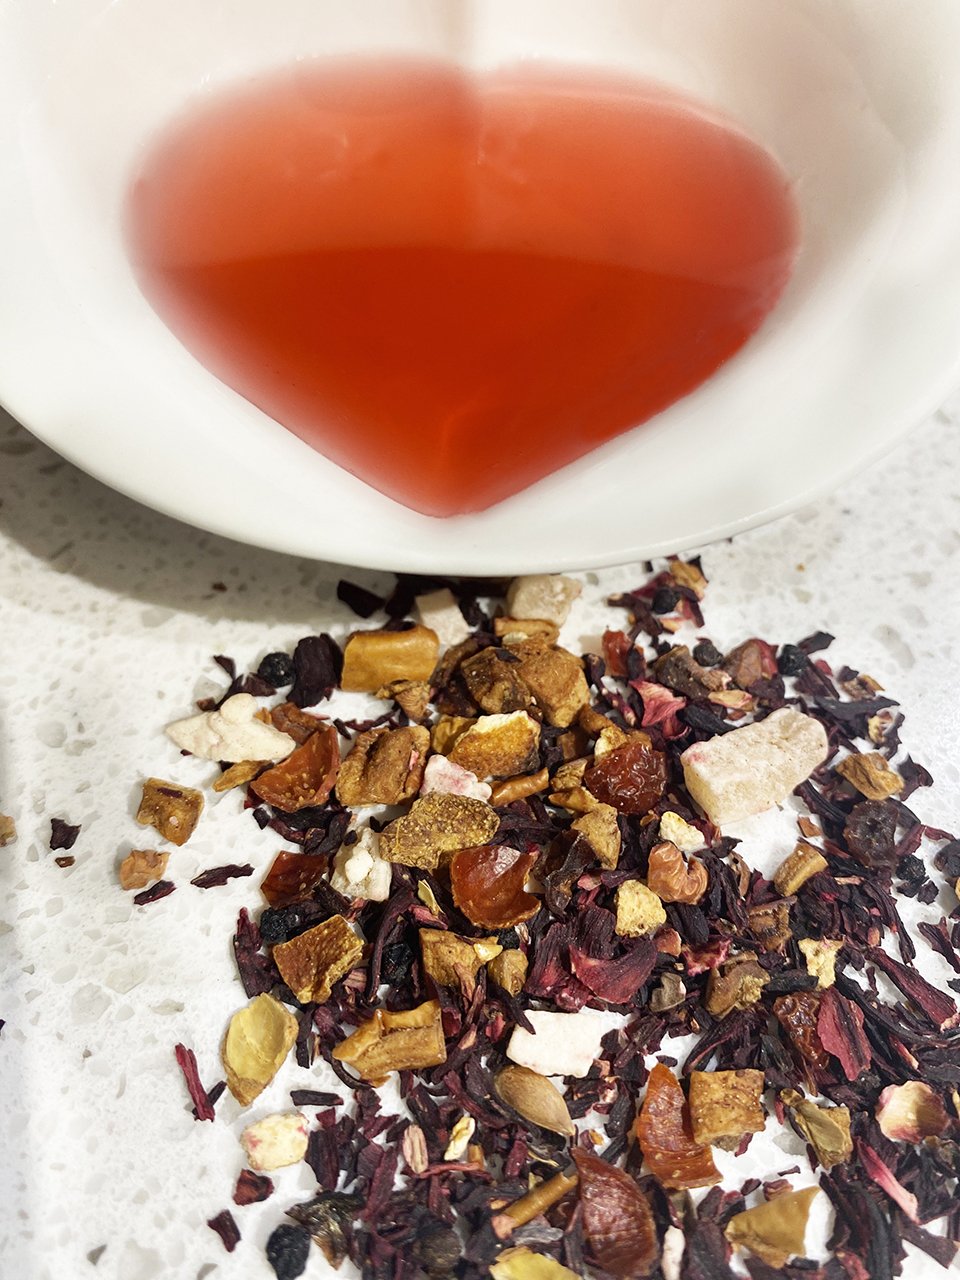 The romantic | Theine-free herbal tea with delicate aromas